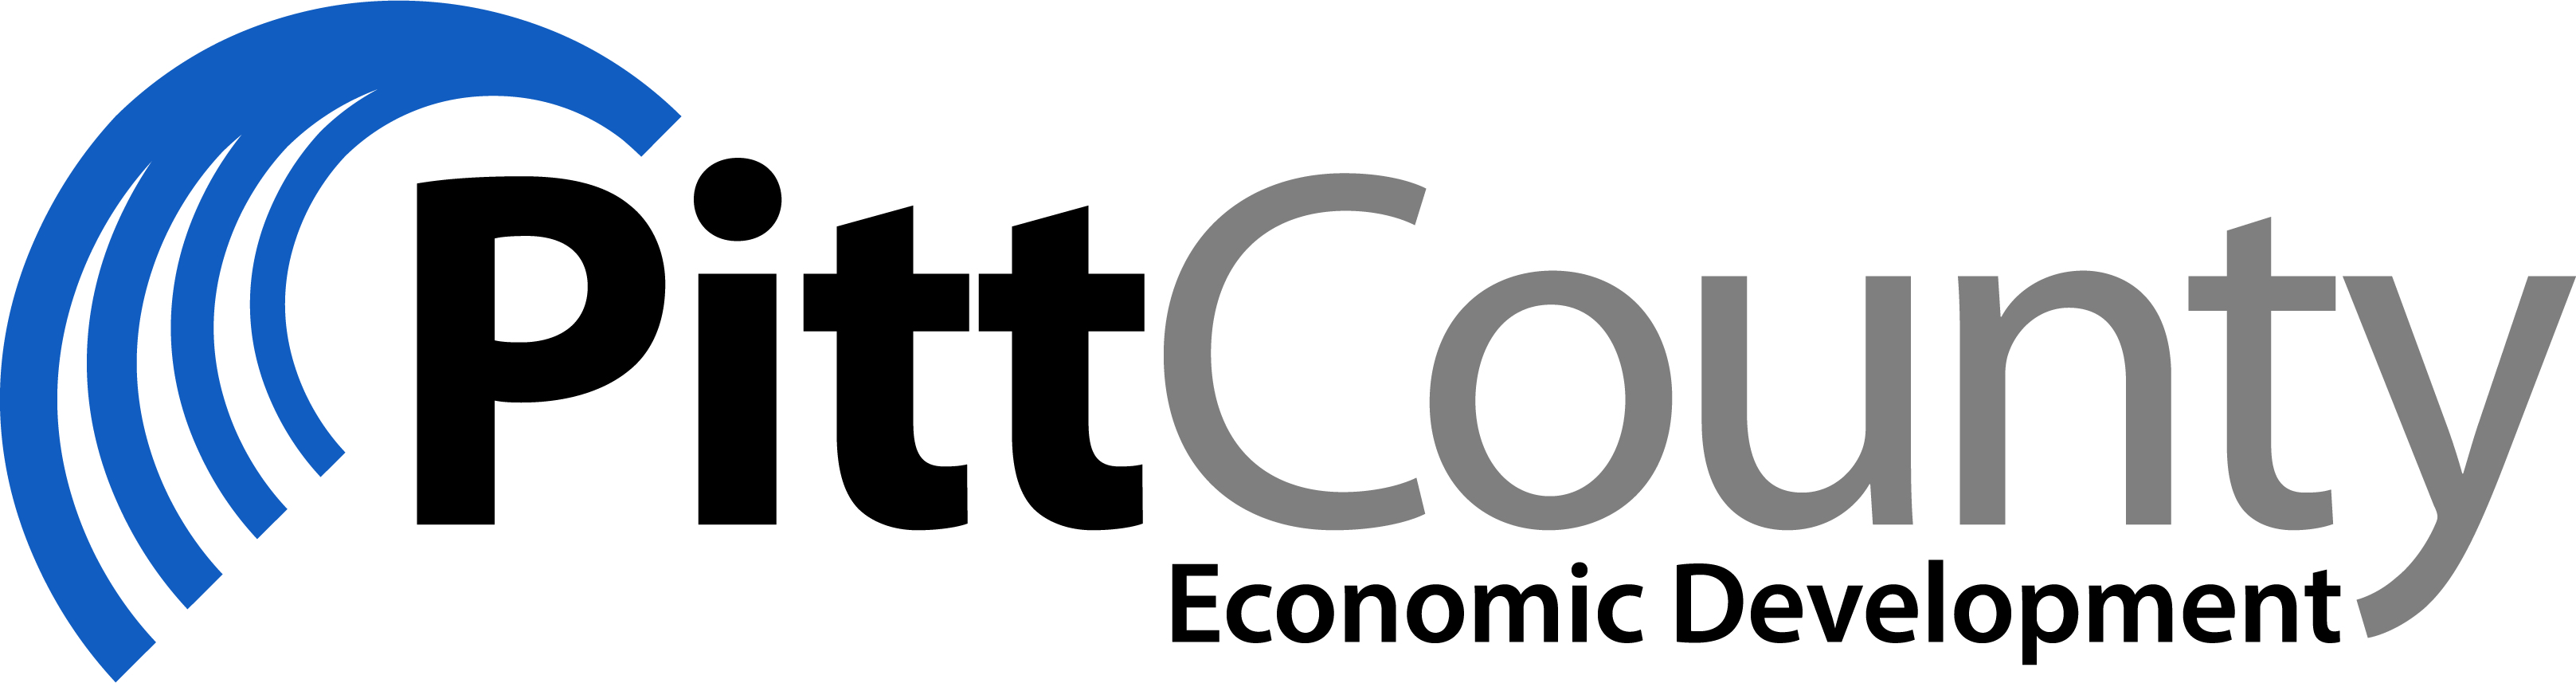 Pitt County Economic Development Logo